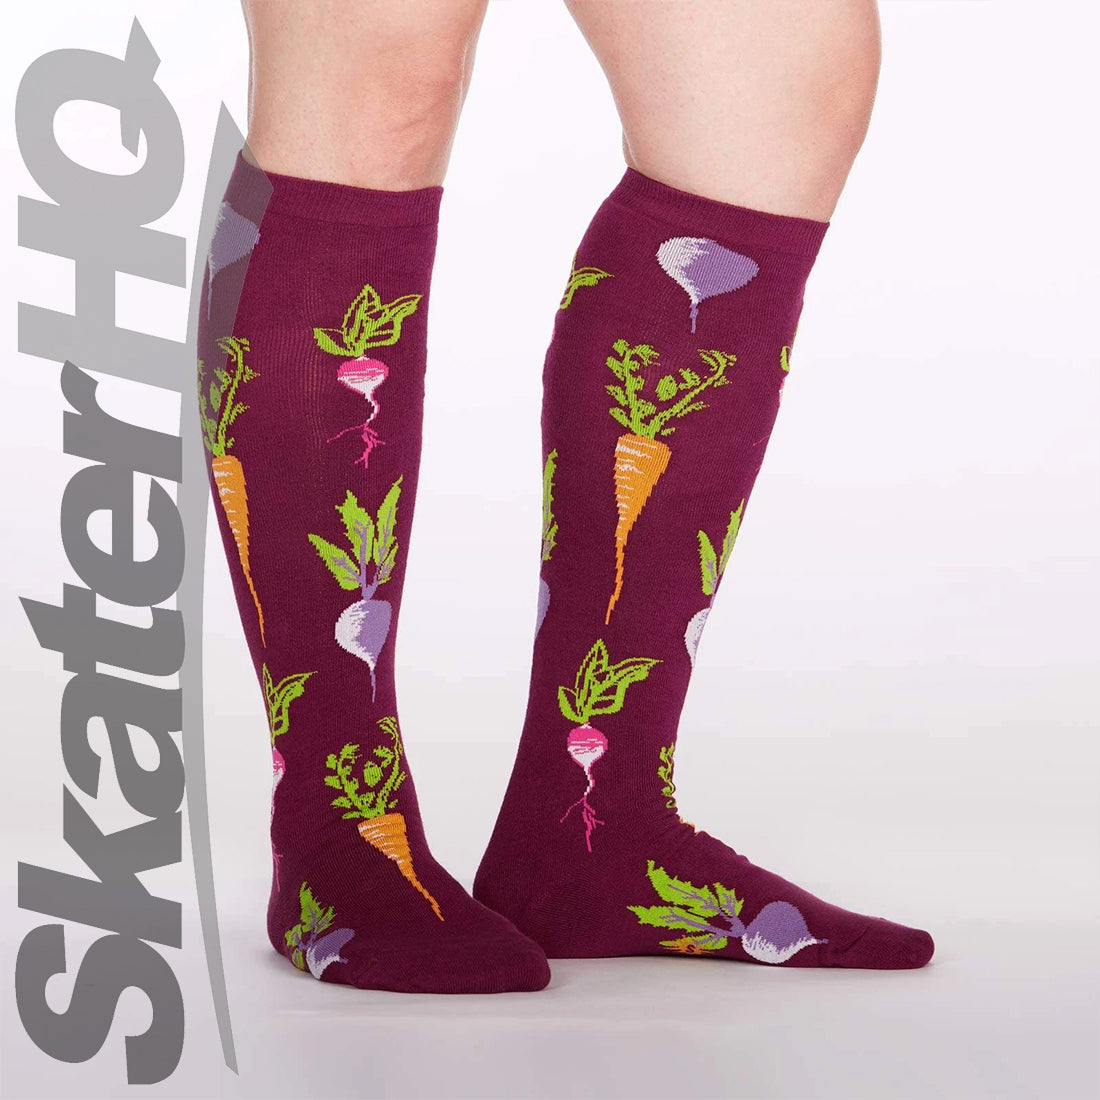 Sock It To Me - Turnip The Beet - Knee High Socks Apparel Socks